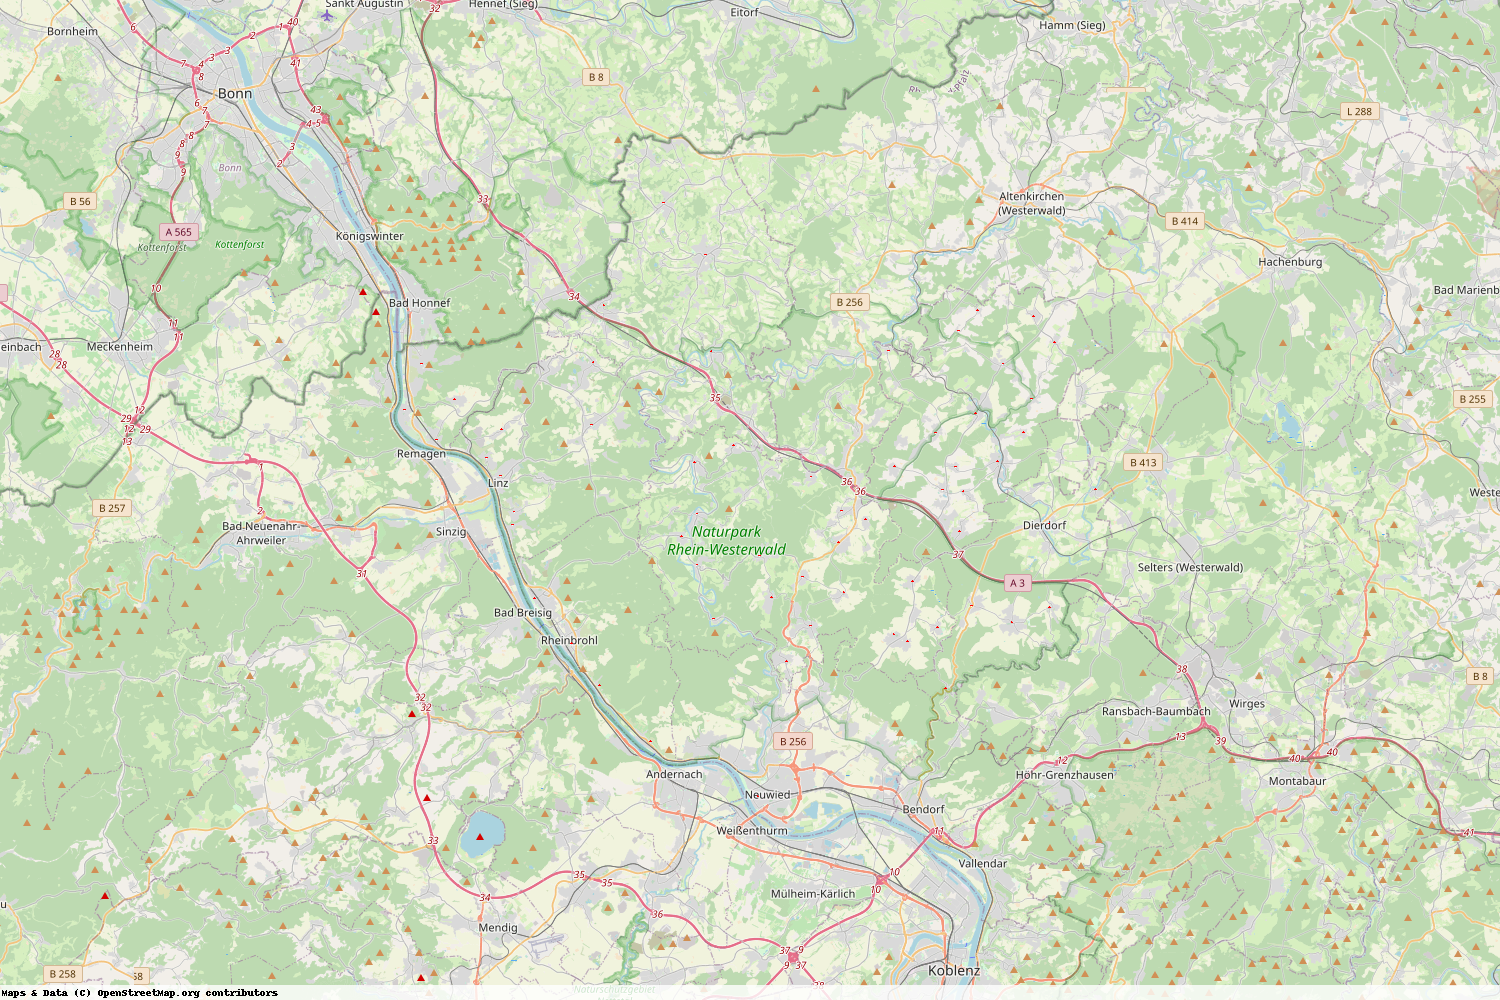 Ist gerade Stromausfall in Rheinland-Pfalz - Neuwied?